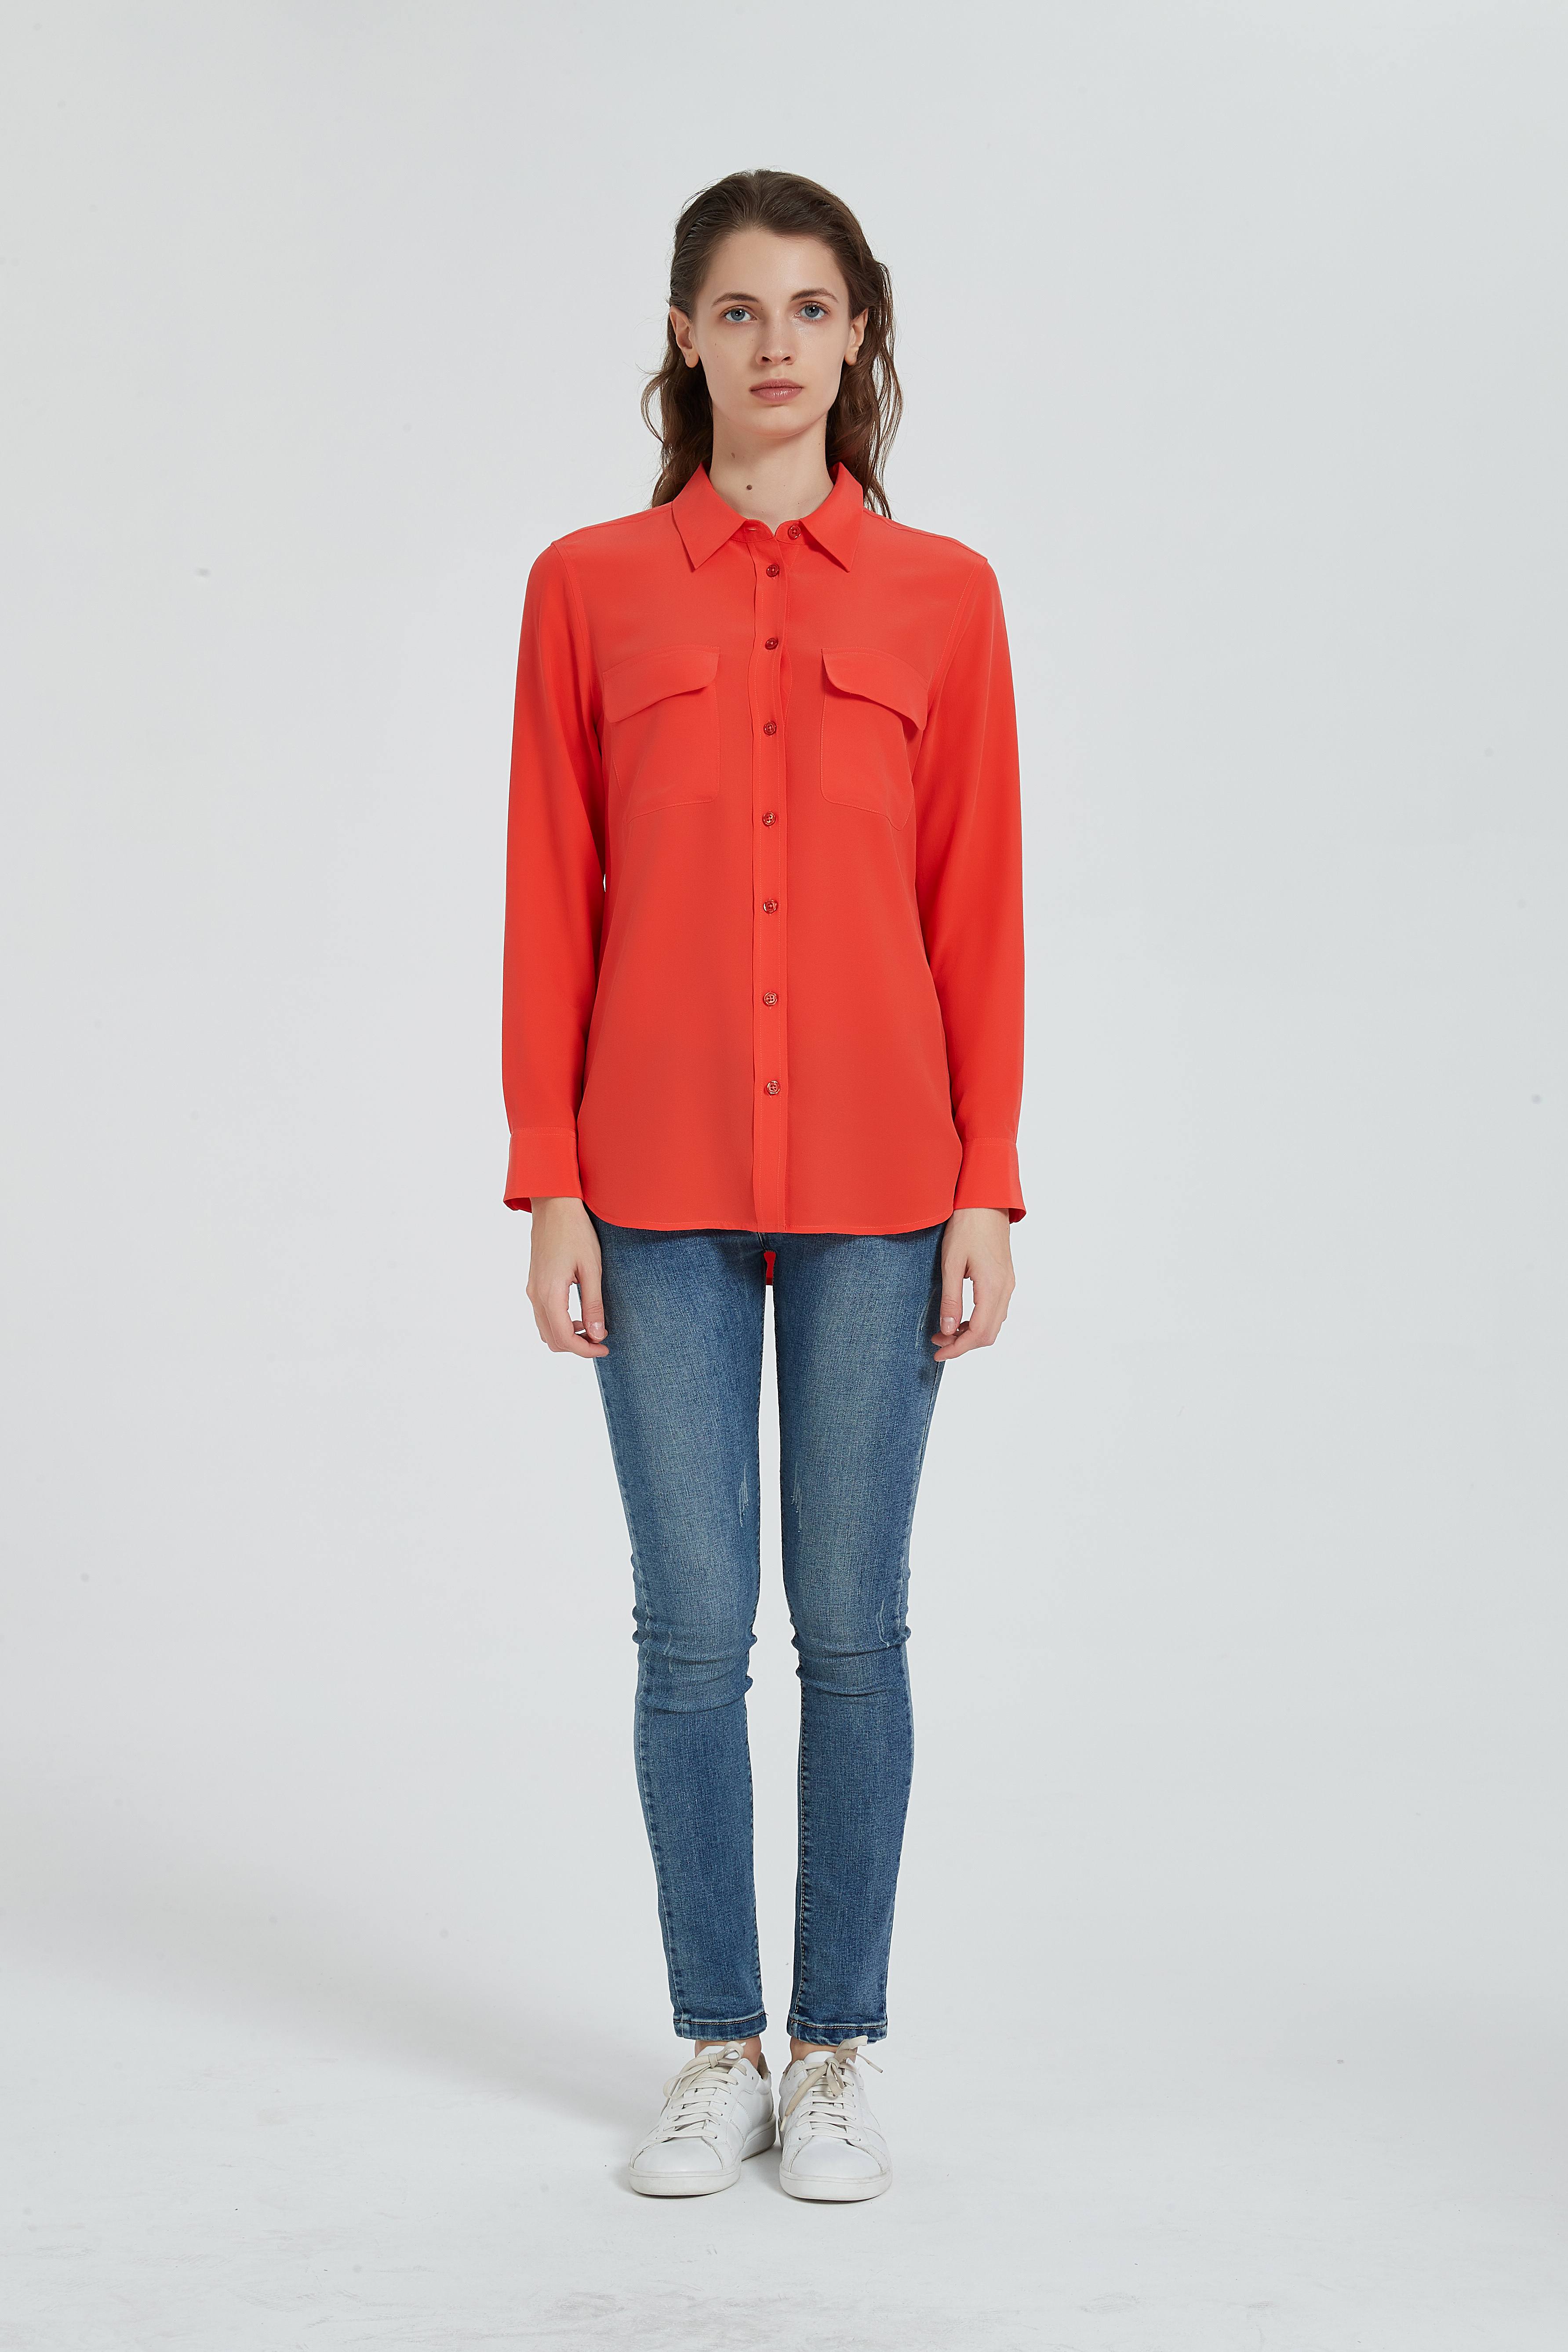 Women's 100% Silk Long Sleeve Blouse, red